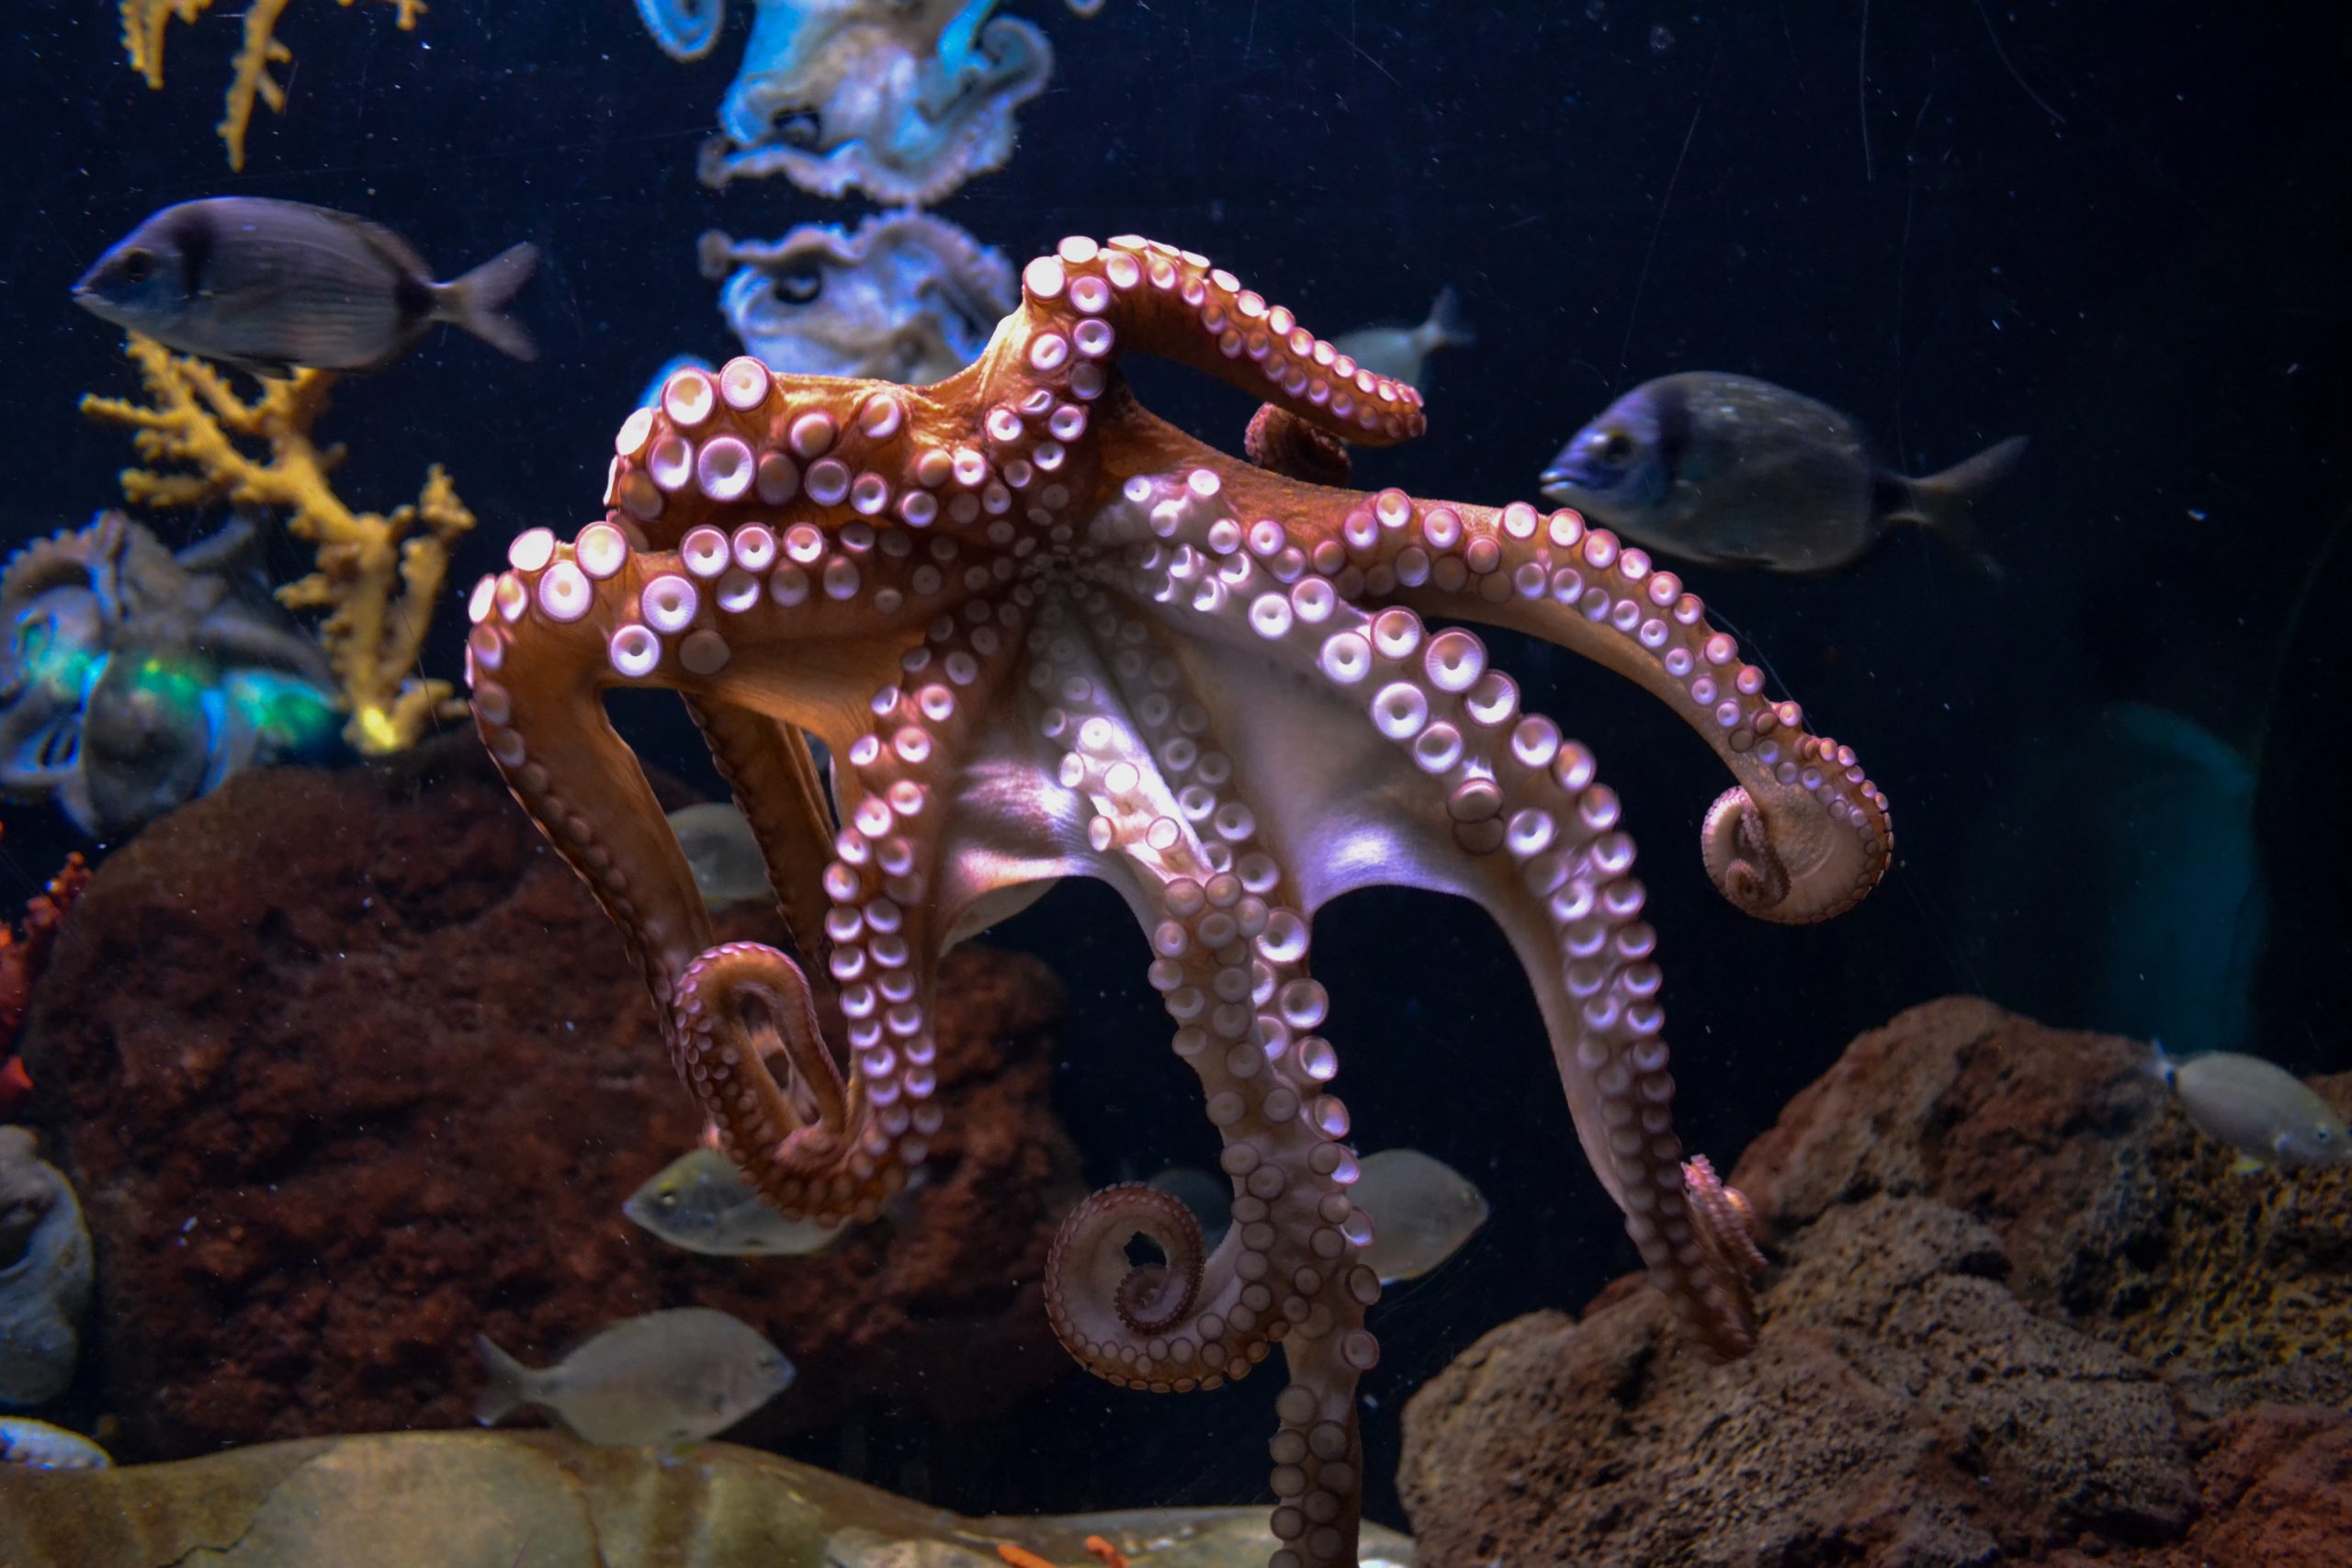 Octopus by Serena Repice Lentini Unsplash